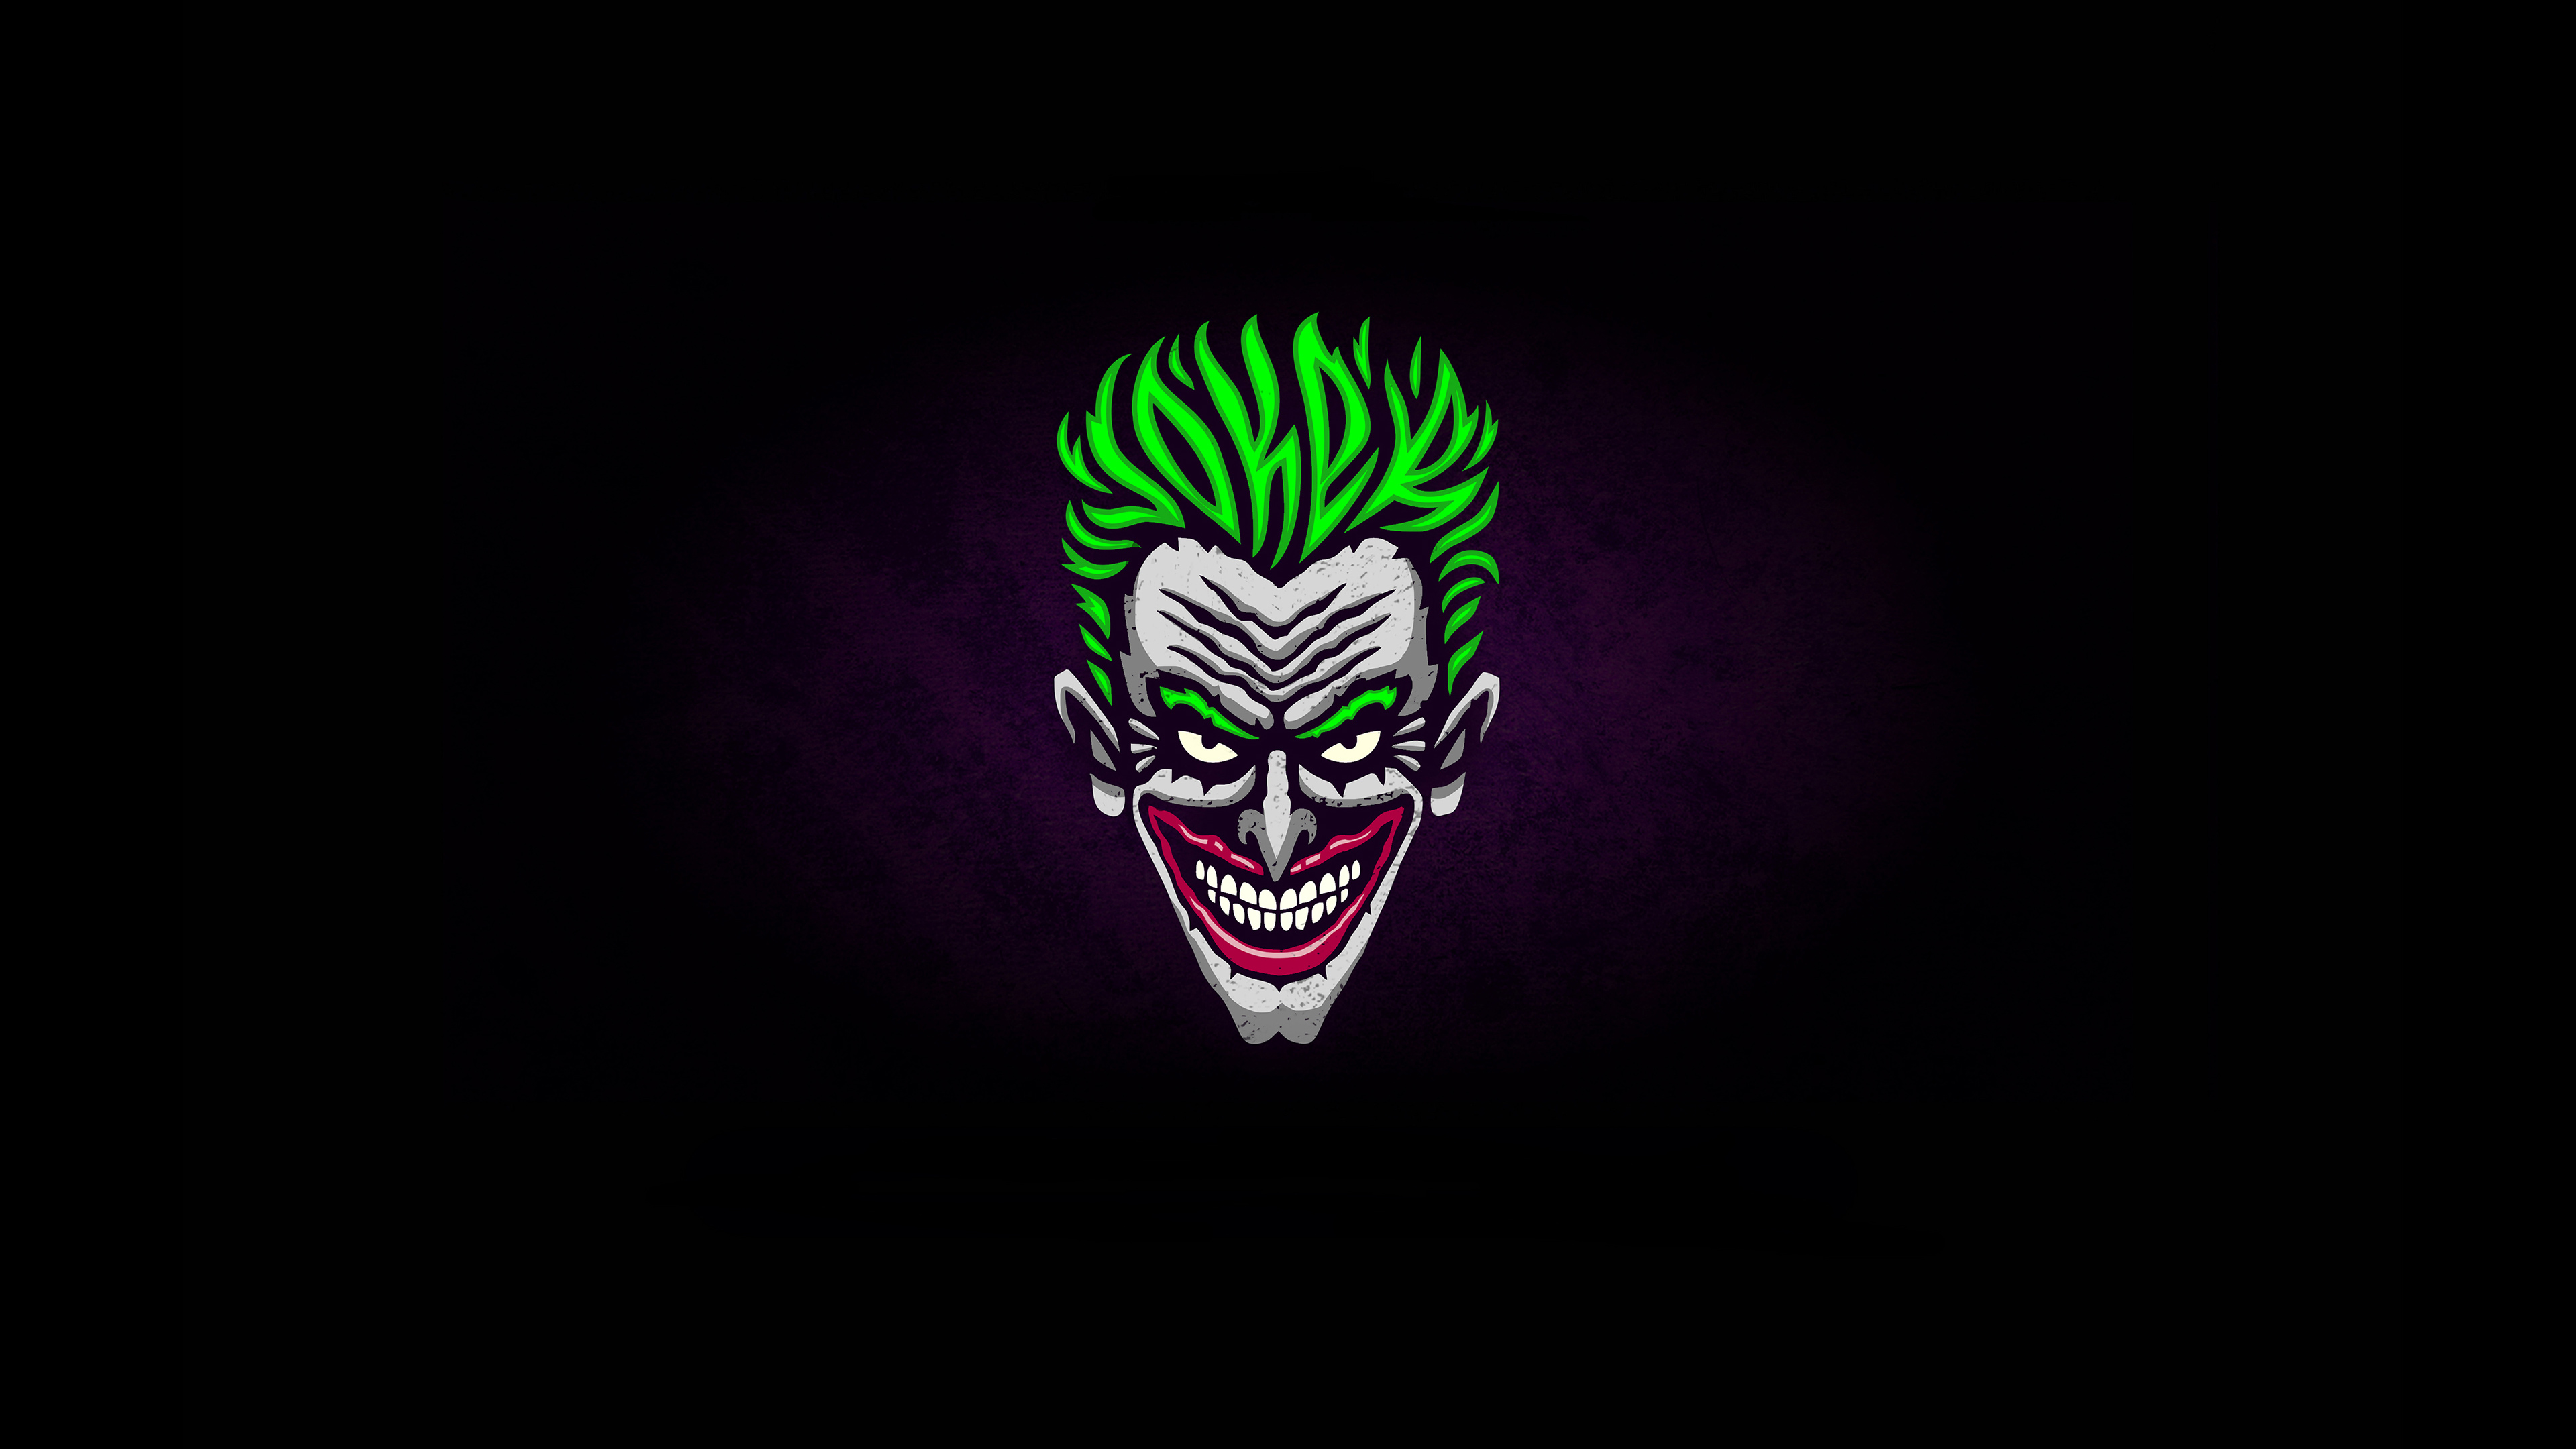 4k Joker 2019 Sony Xperia X XZ Z5 Premium HD 4k Im... iPhone Wallpapers  Free Download